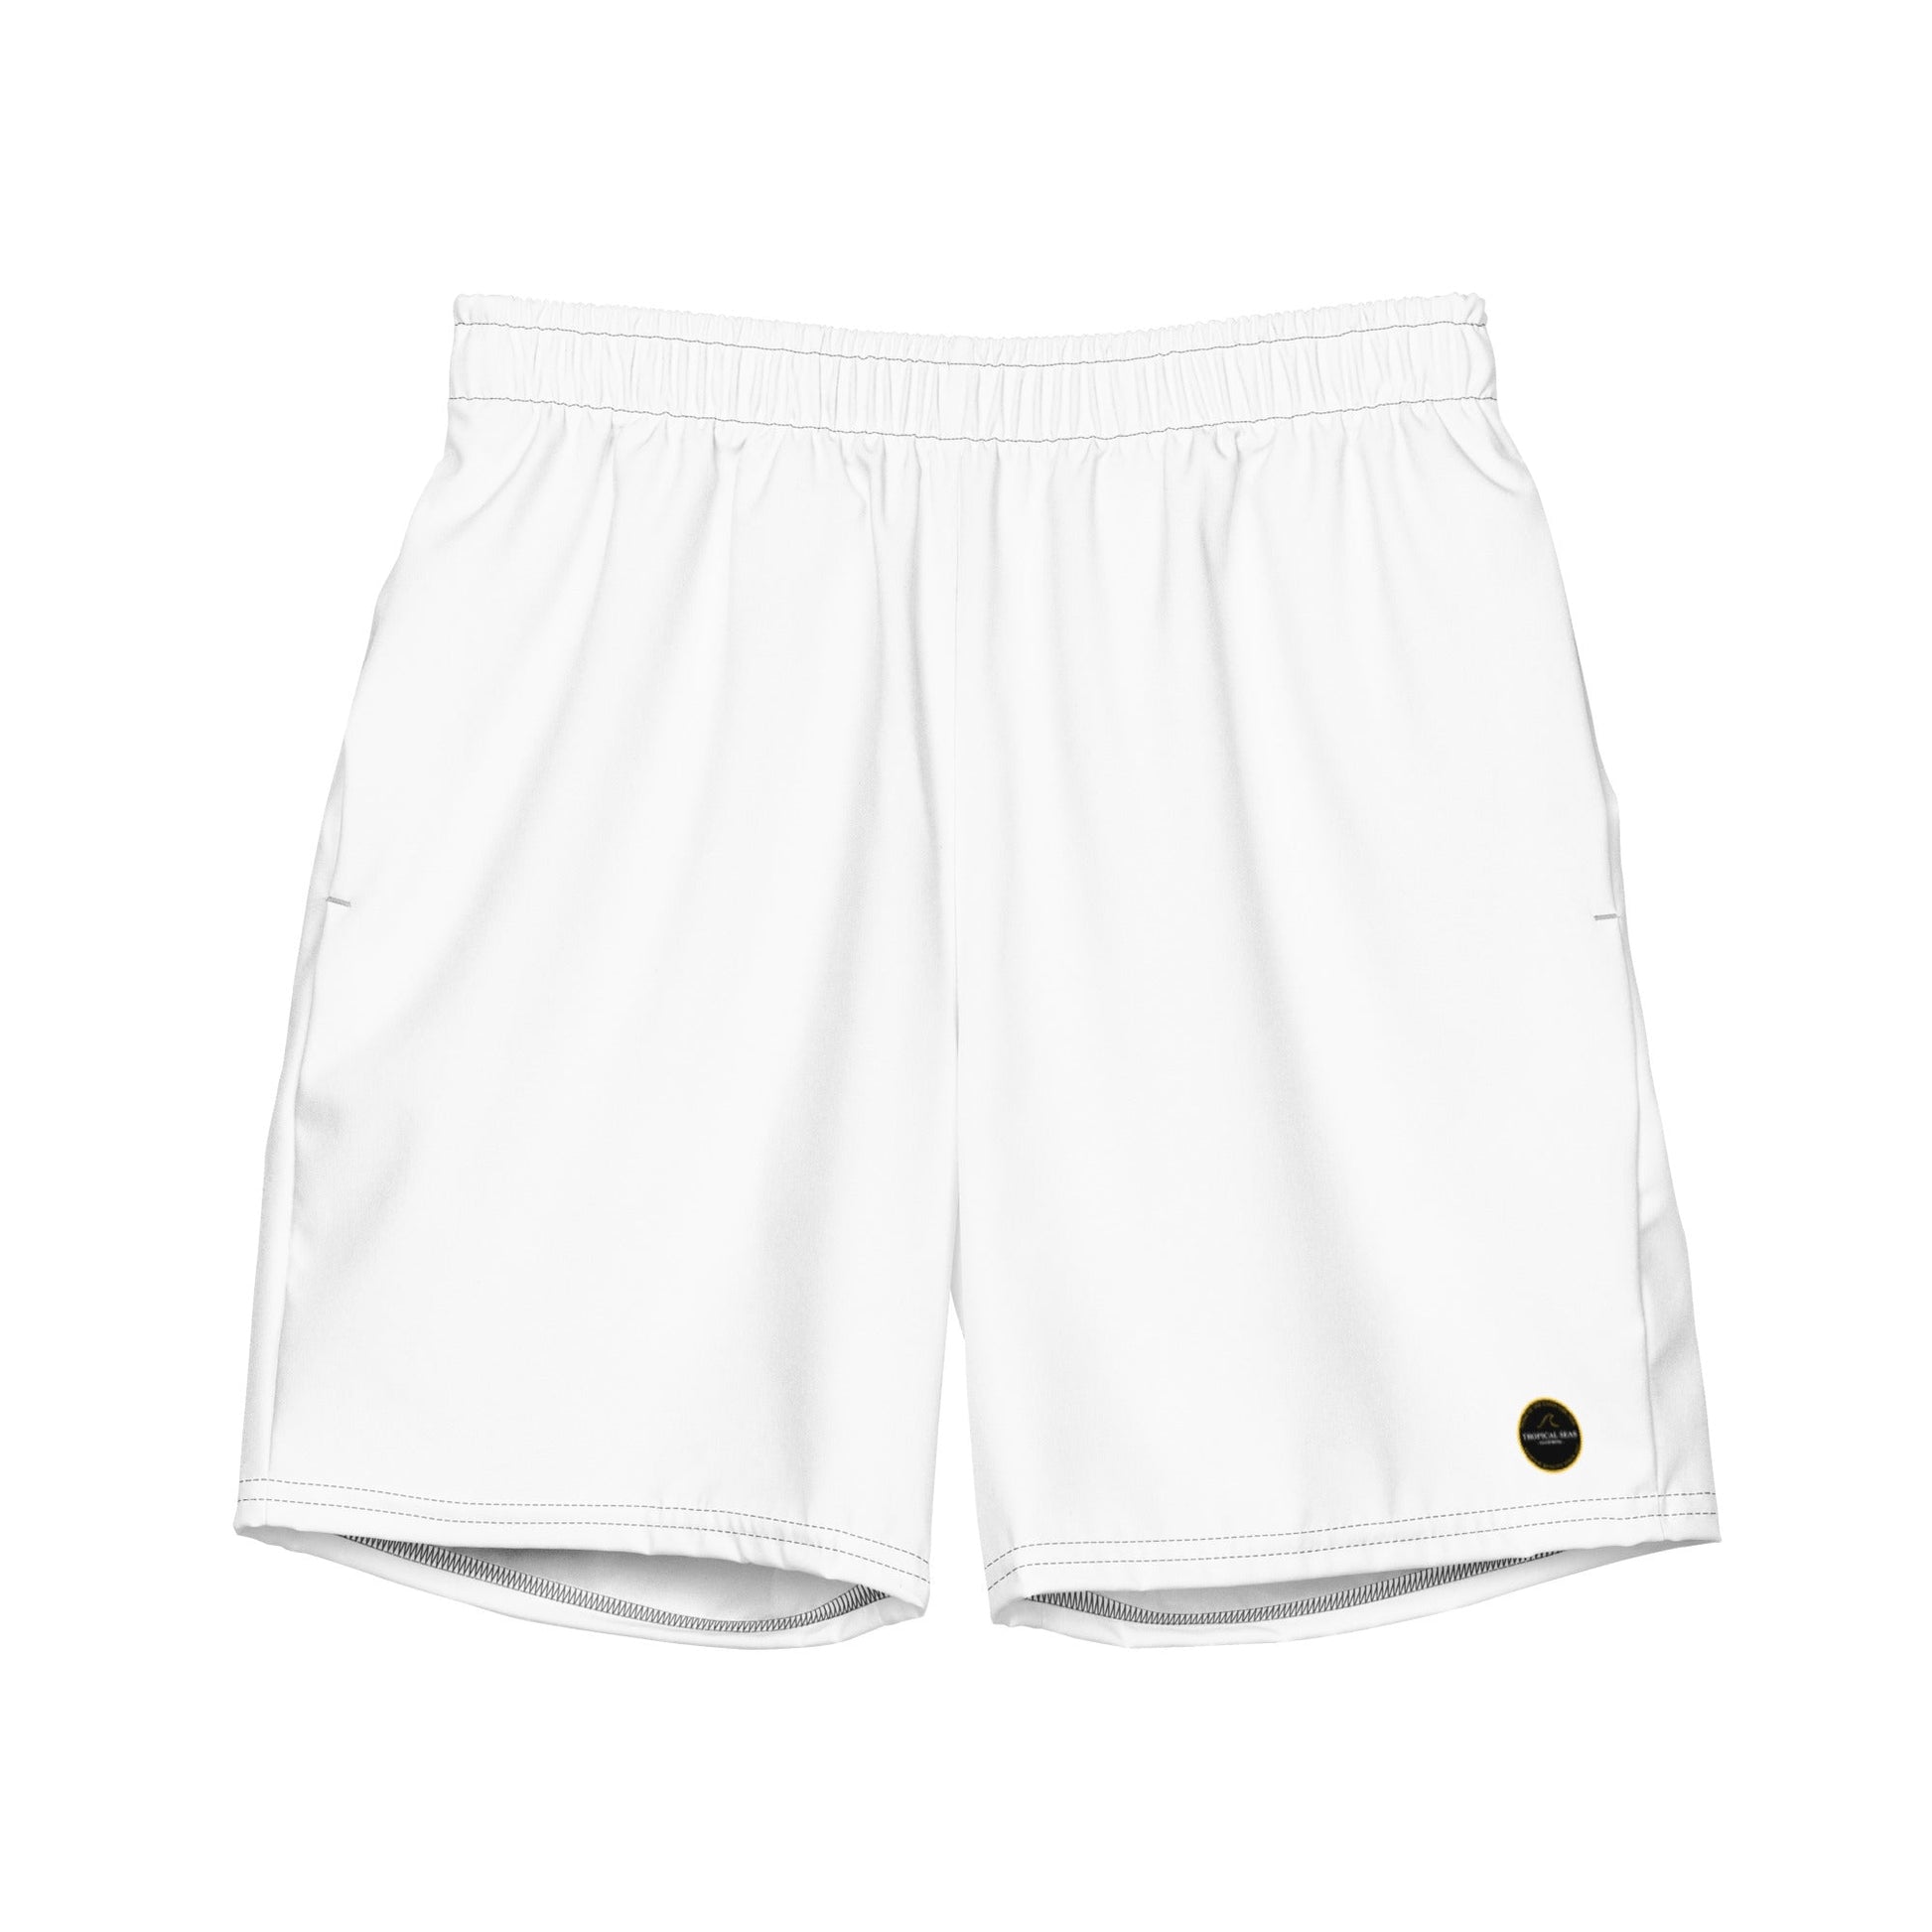 Men's White Eco Board Shorts - Tropical Seas Clothing 